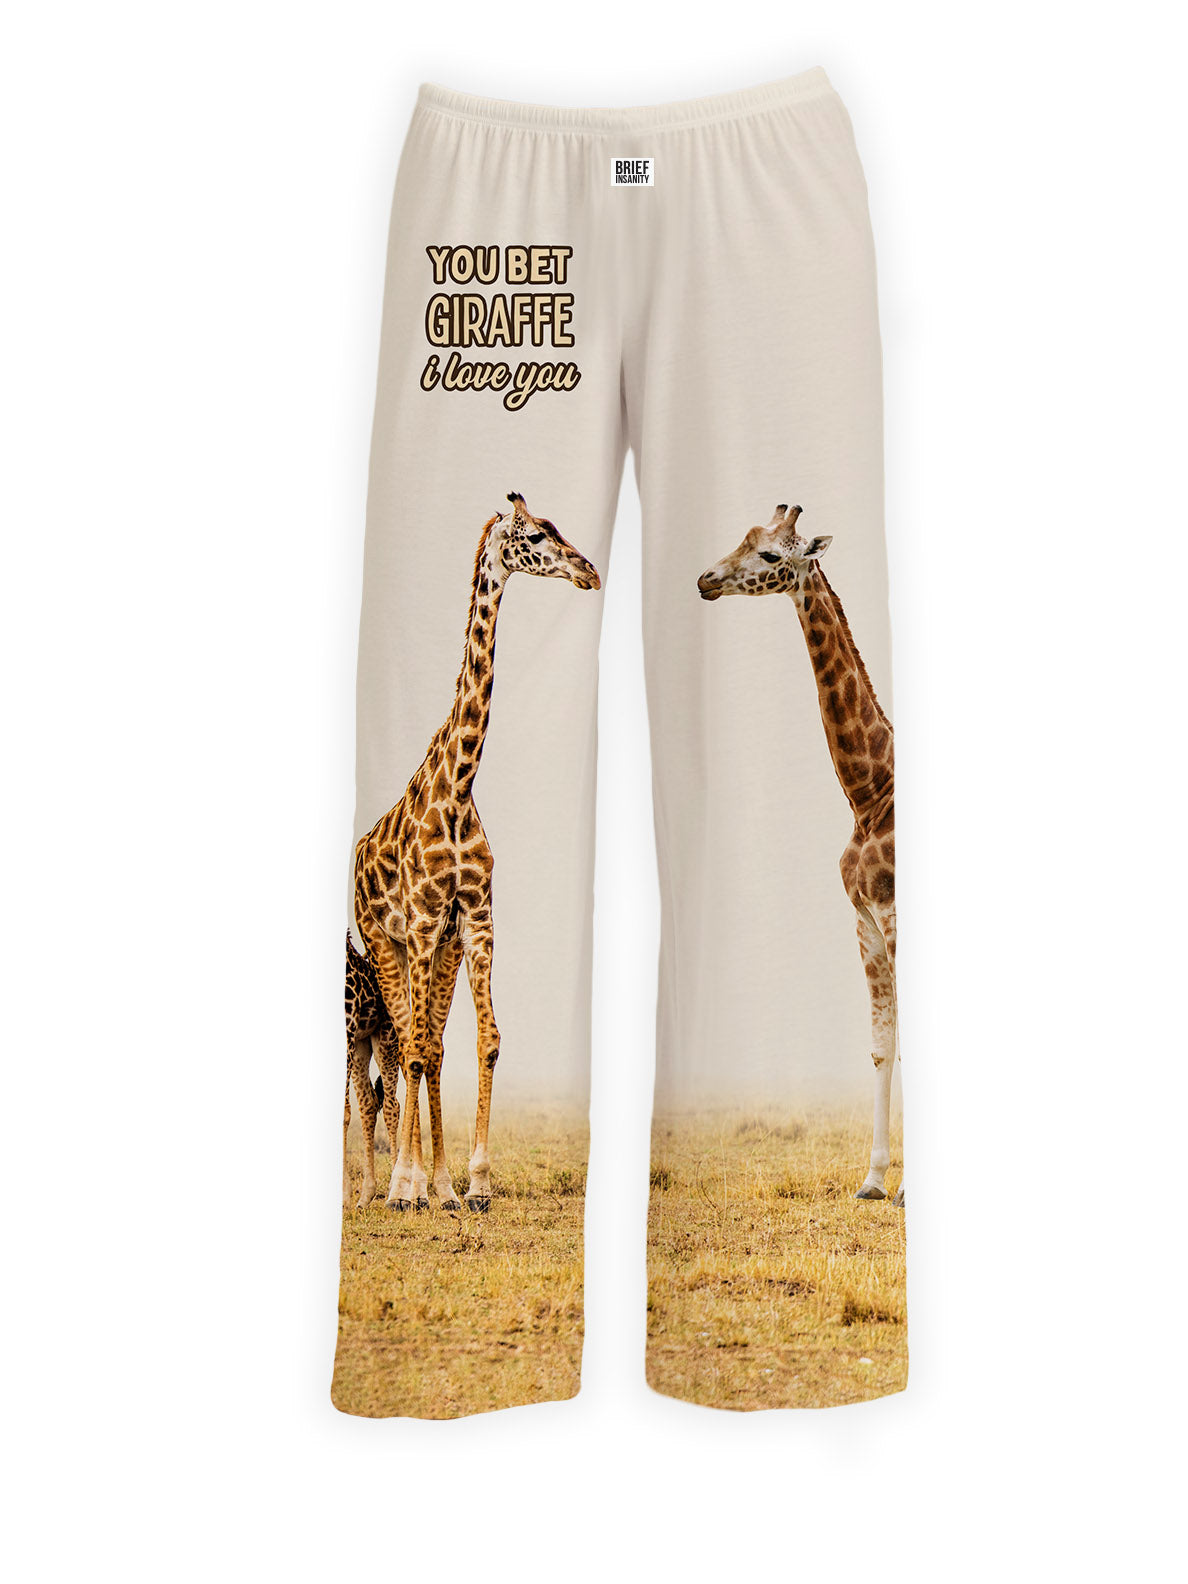 BRIEF INSANITY You Bet Giraffe I Love You Lounge Pants